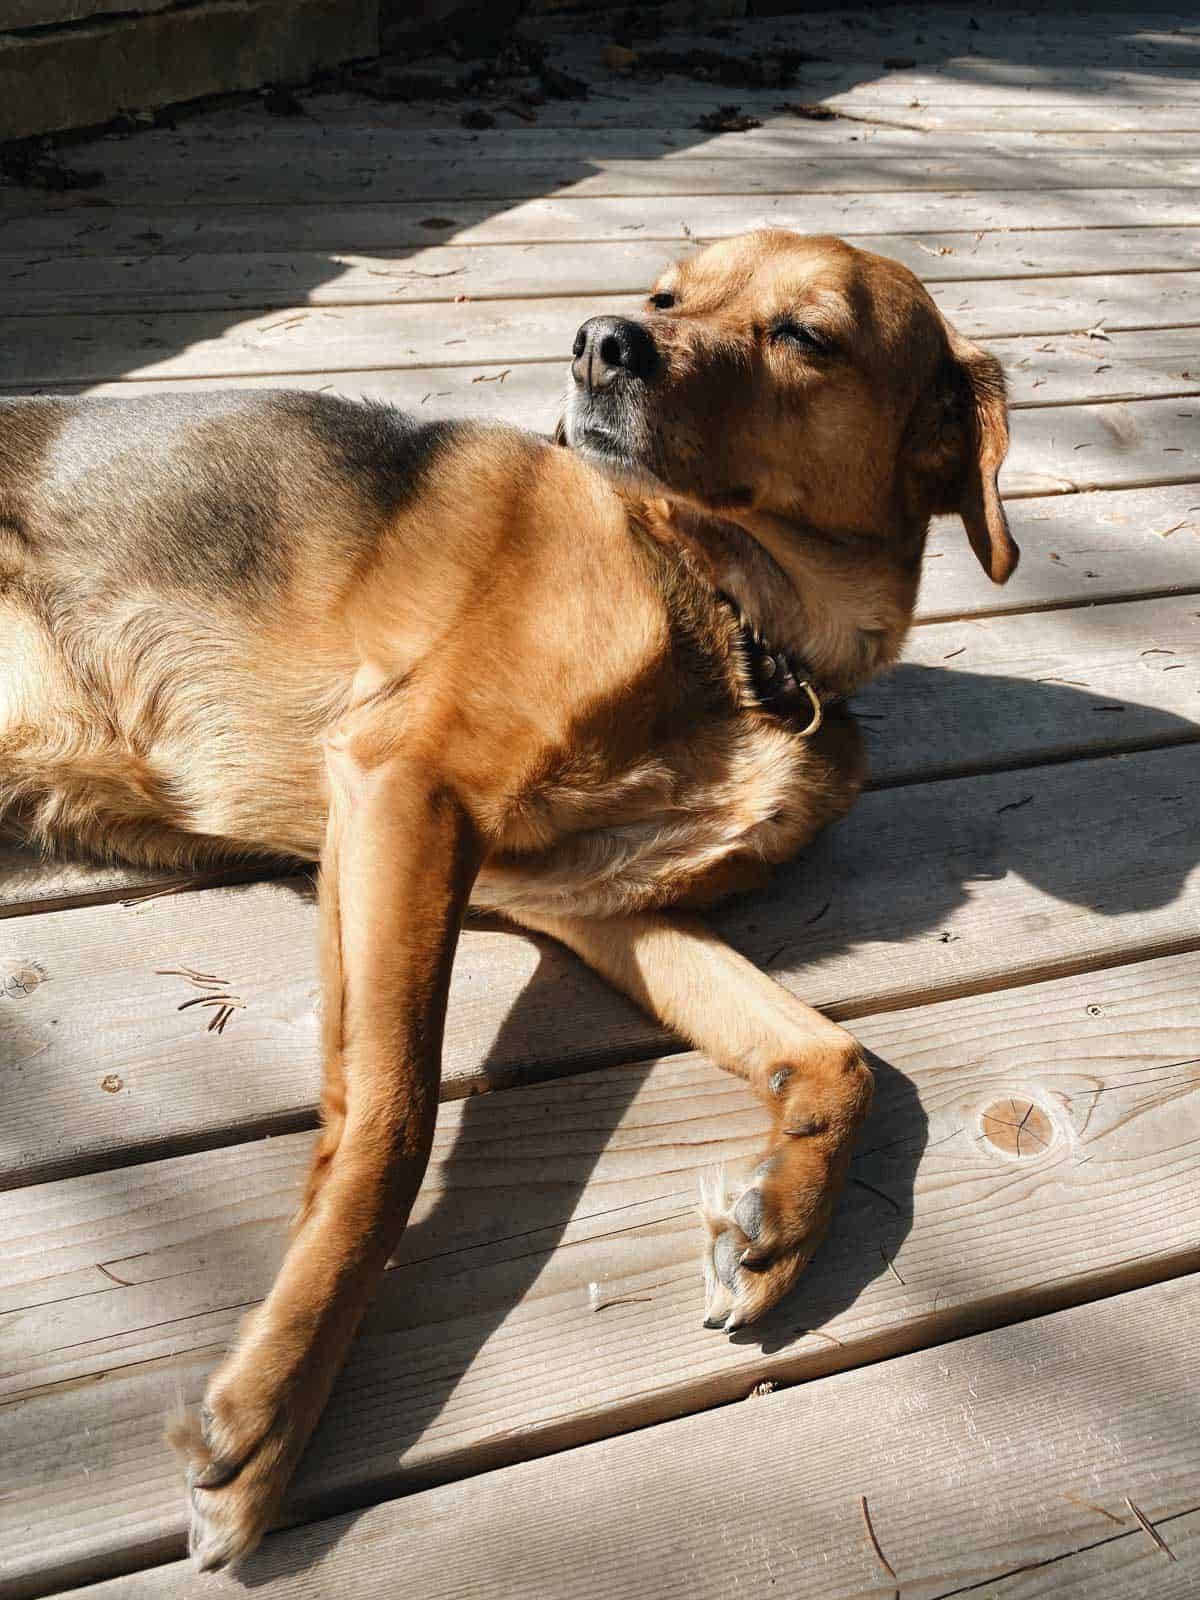 A dog lying in the sun.